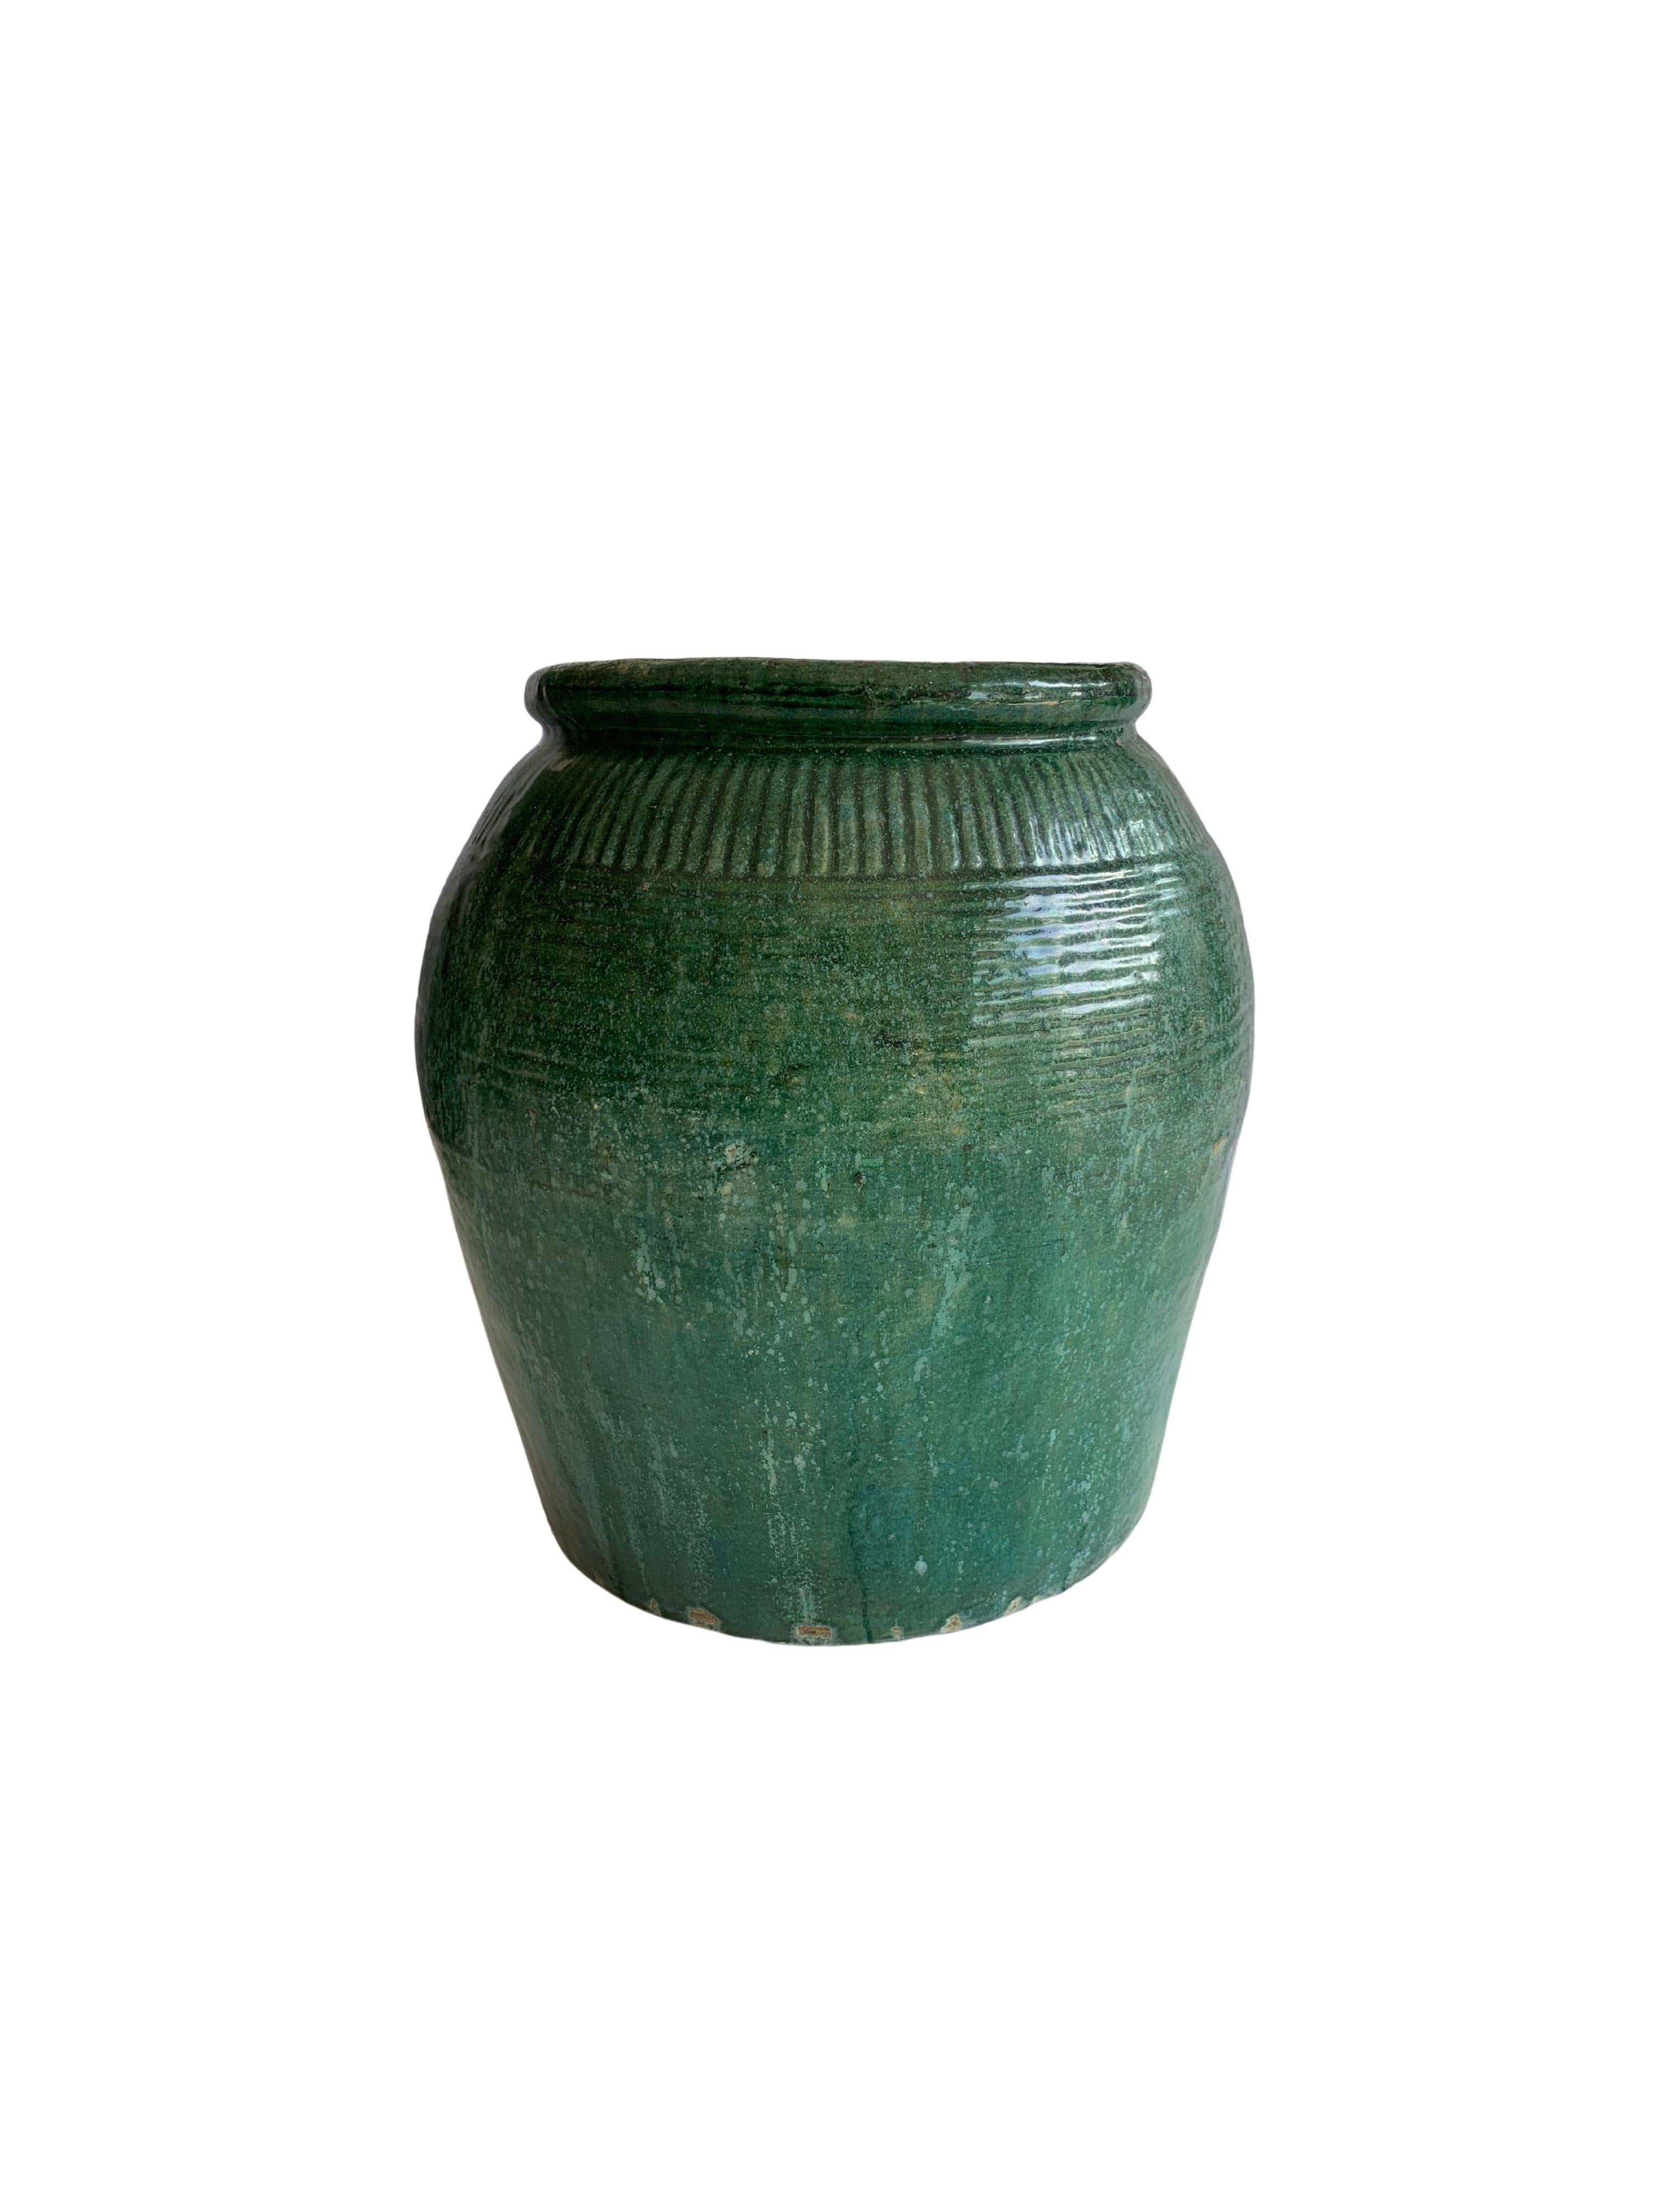 20th Century Antique Chinese Green Glazed Ceramic Soy Sauce Jar, C. 1900